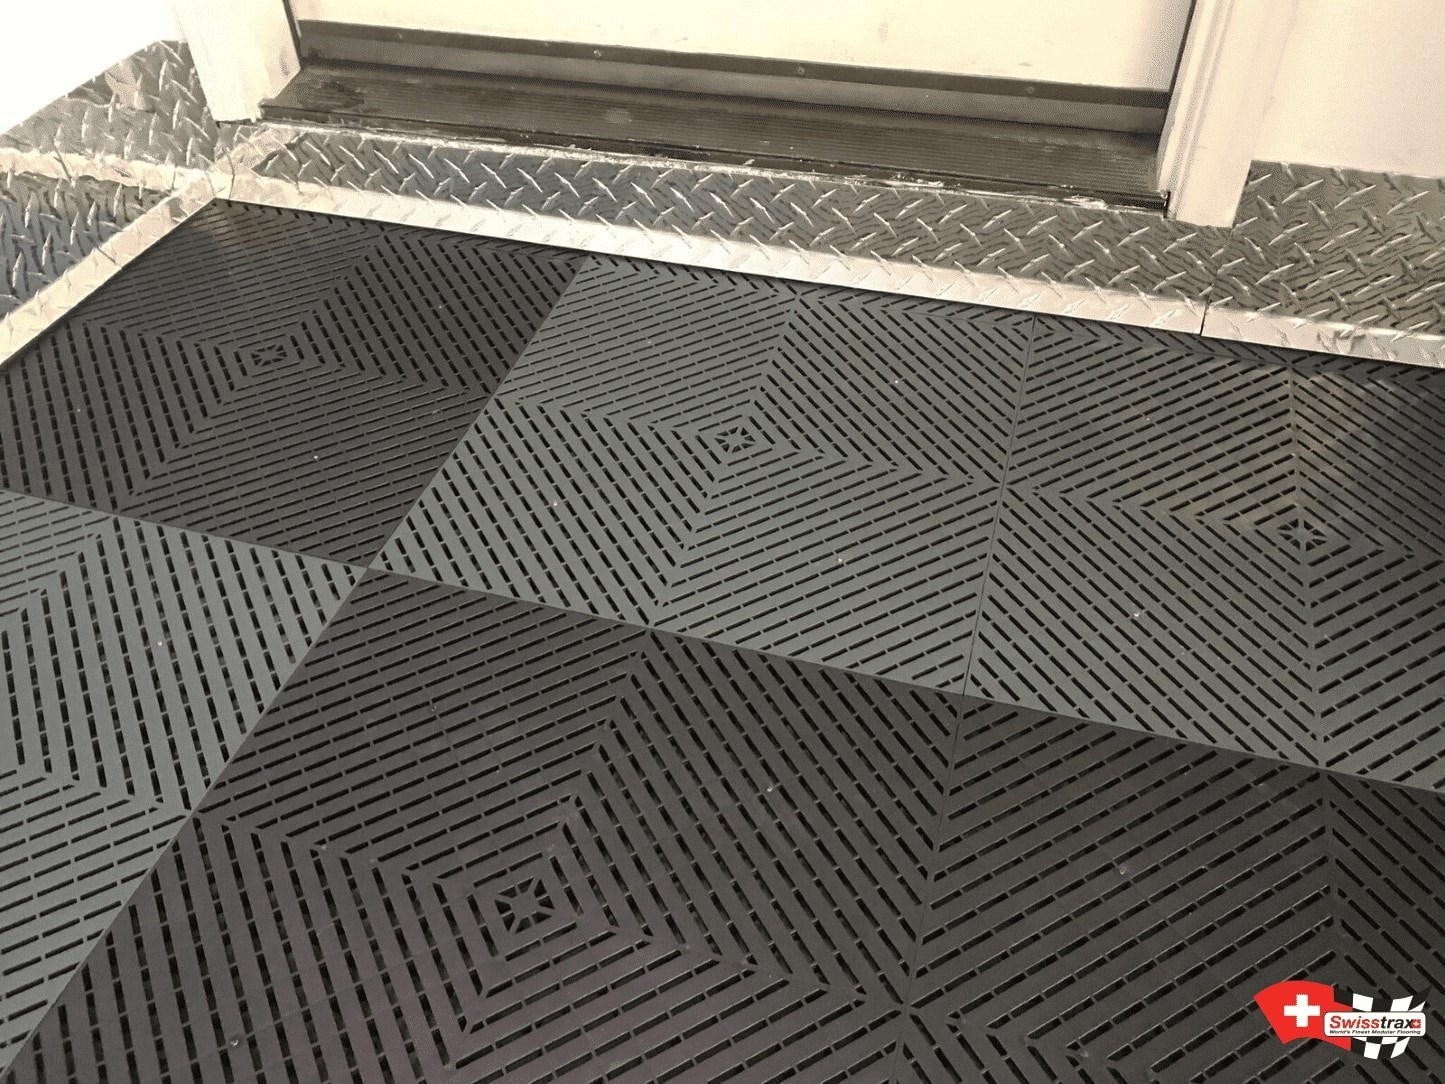 Ribtrax Pro One Car Garage Floor Tile Mat (Jet Black / Racing Red)